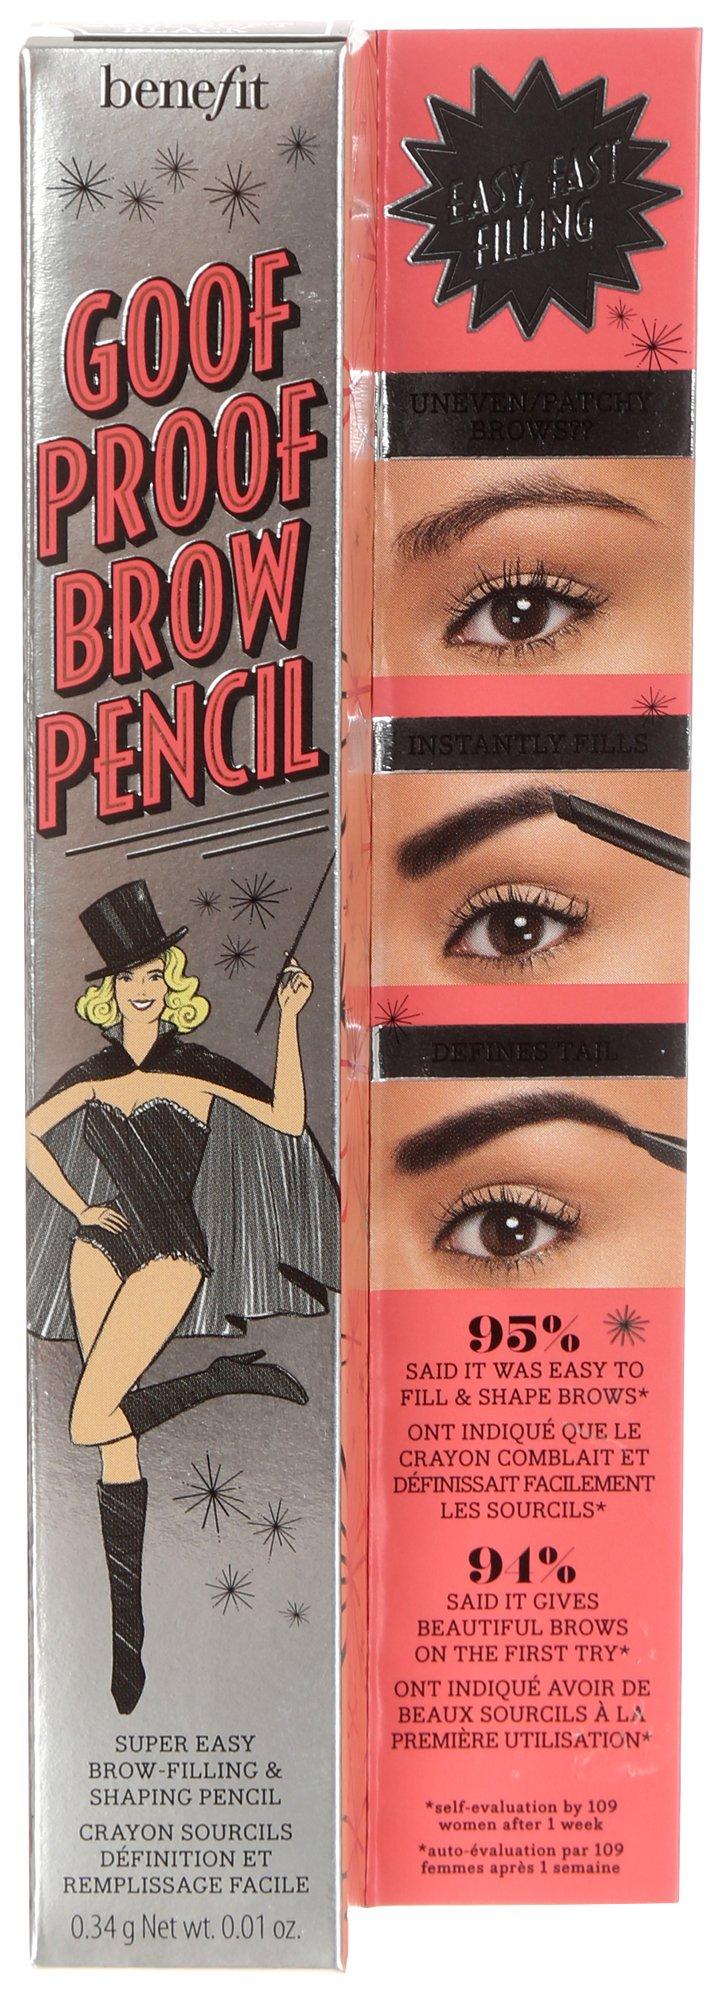 Goof Proof Brown Pencil